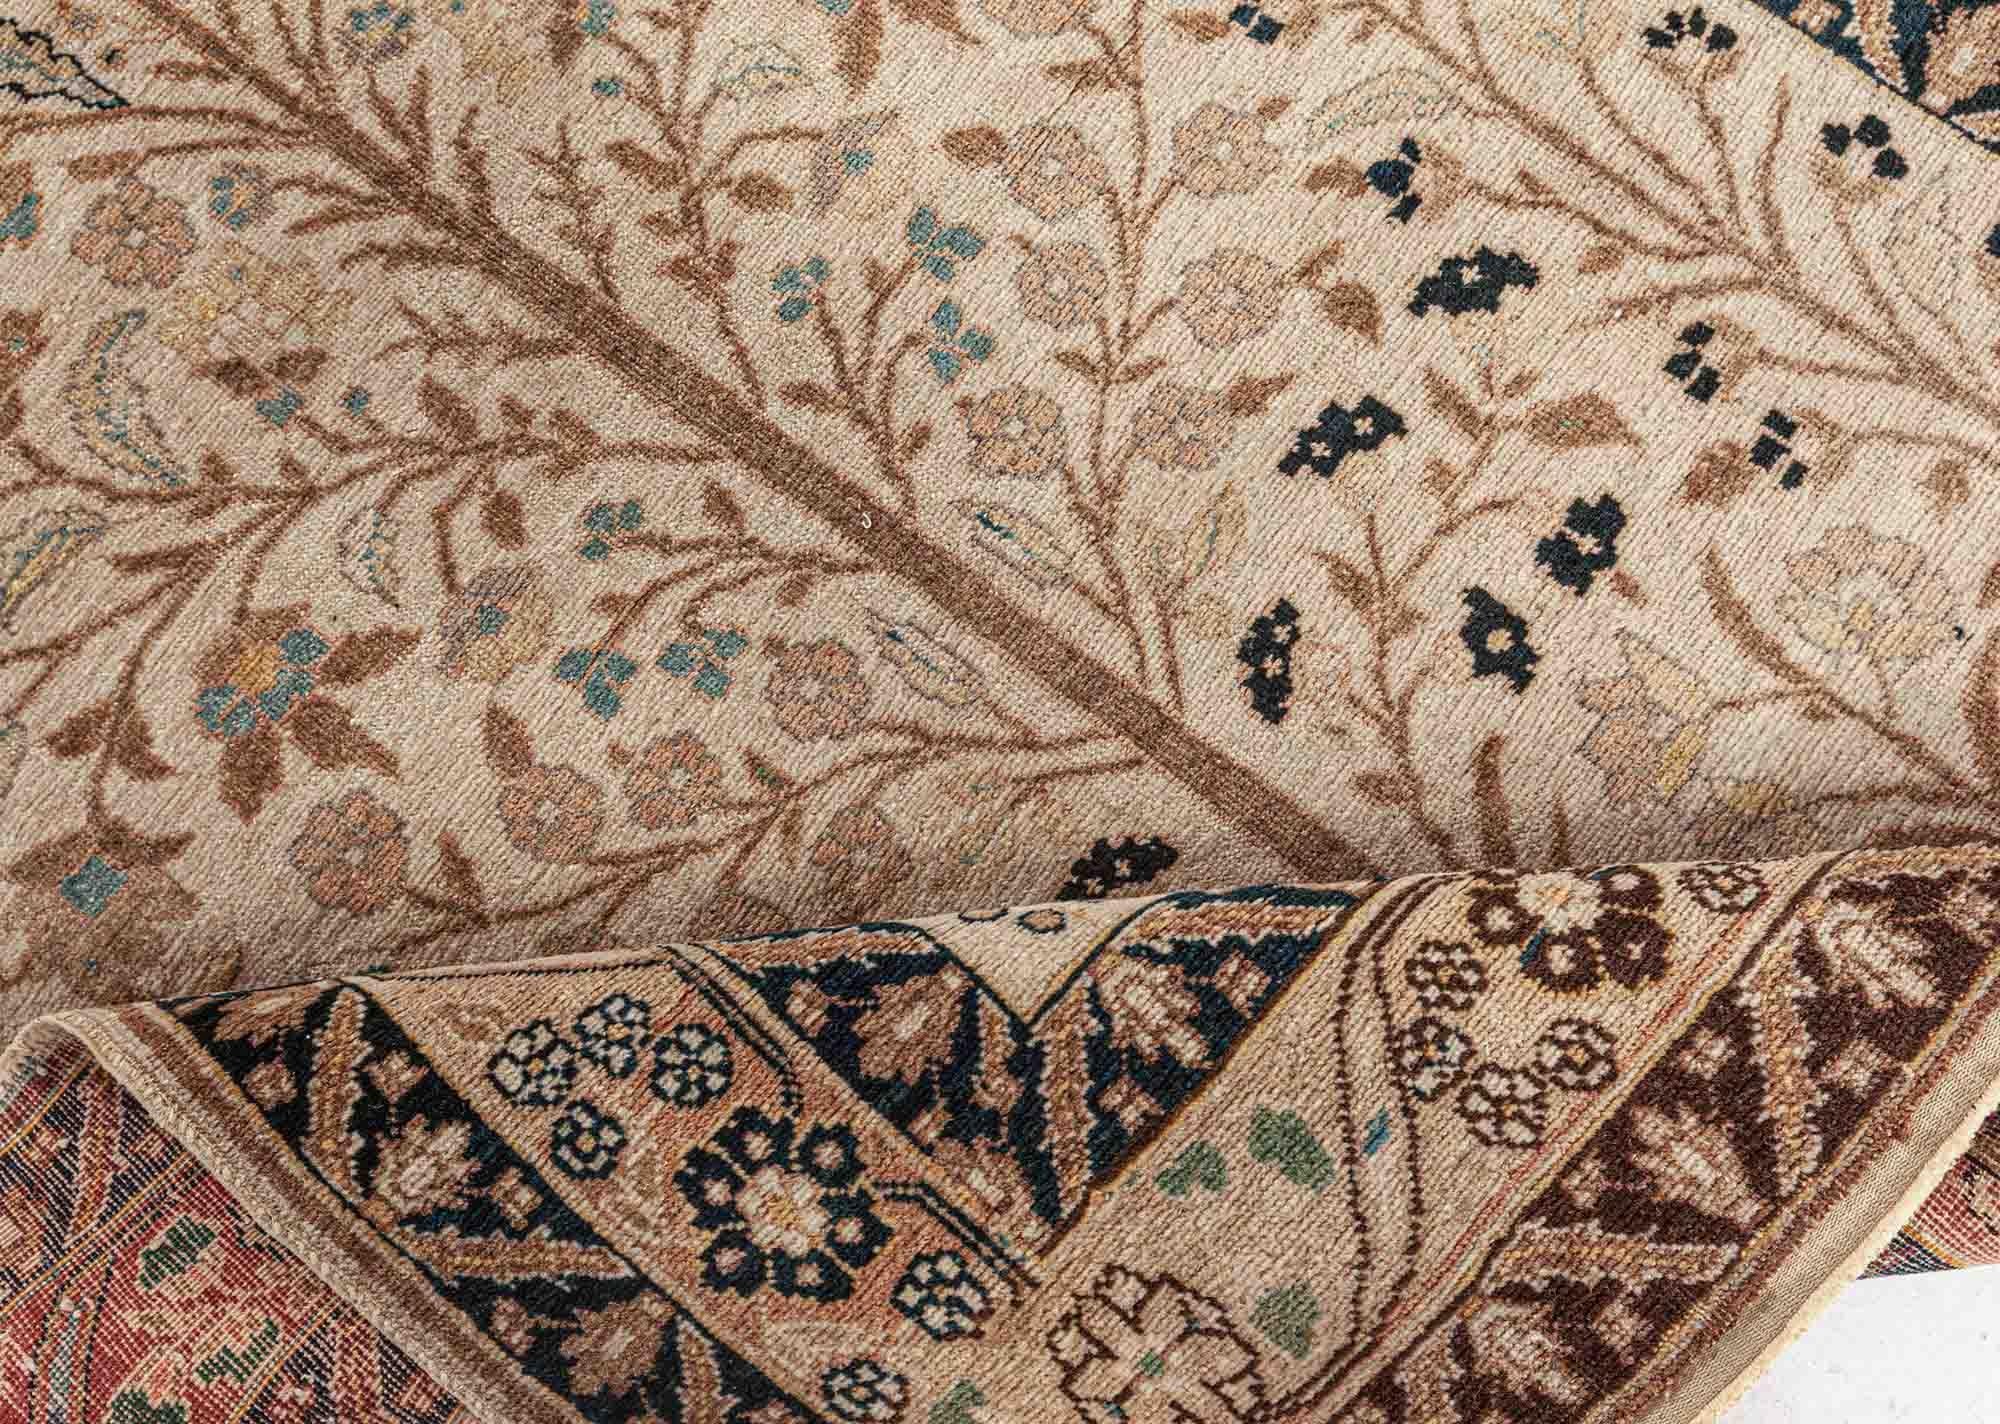 Antique Persian Tabriz Rug
Size: 4'0